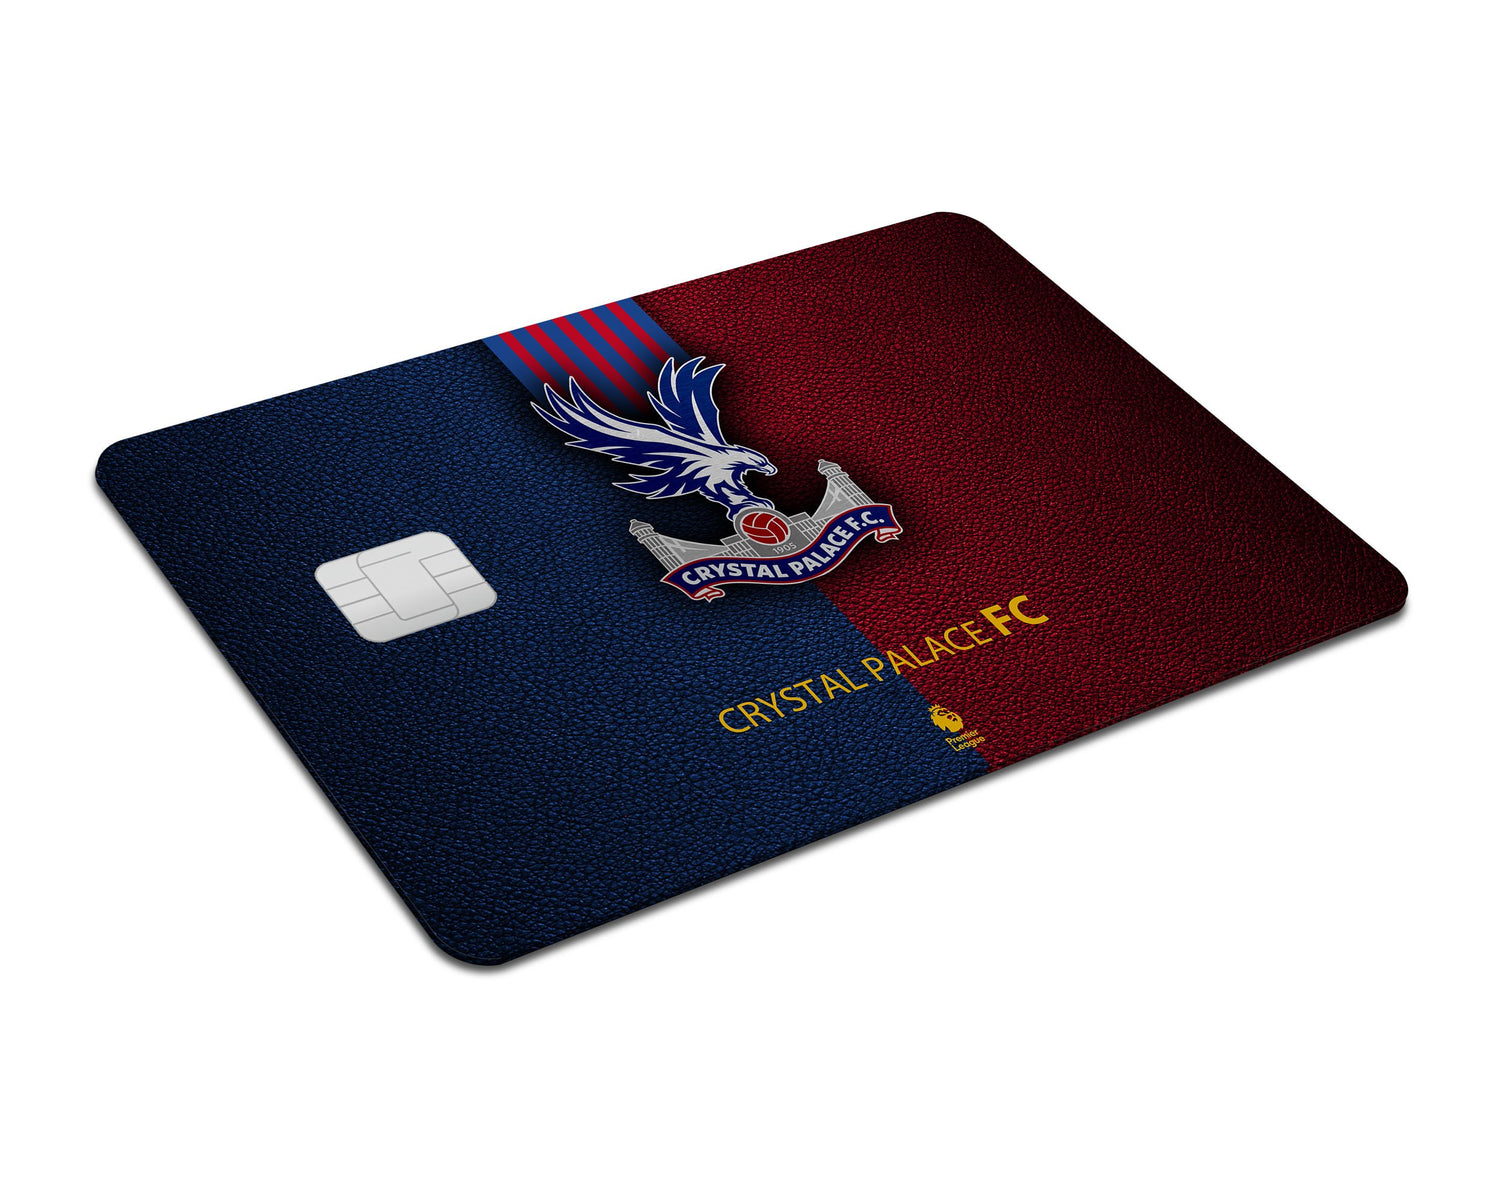 Flex Designs Credit Card Crystal Palace Full Skins - Sports Soccer & Debit Card Skin